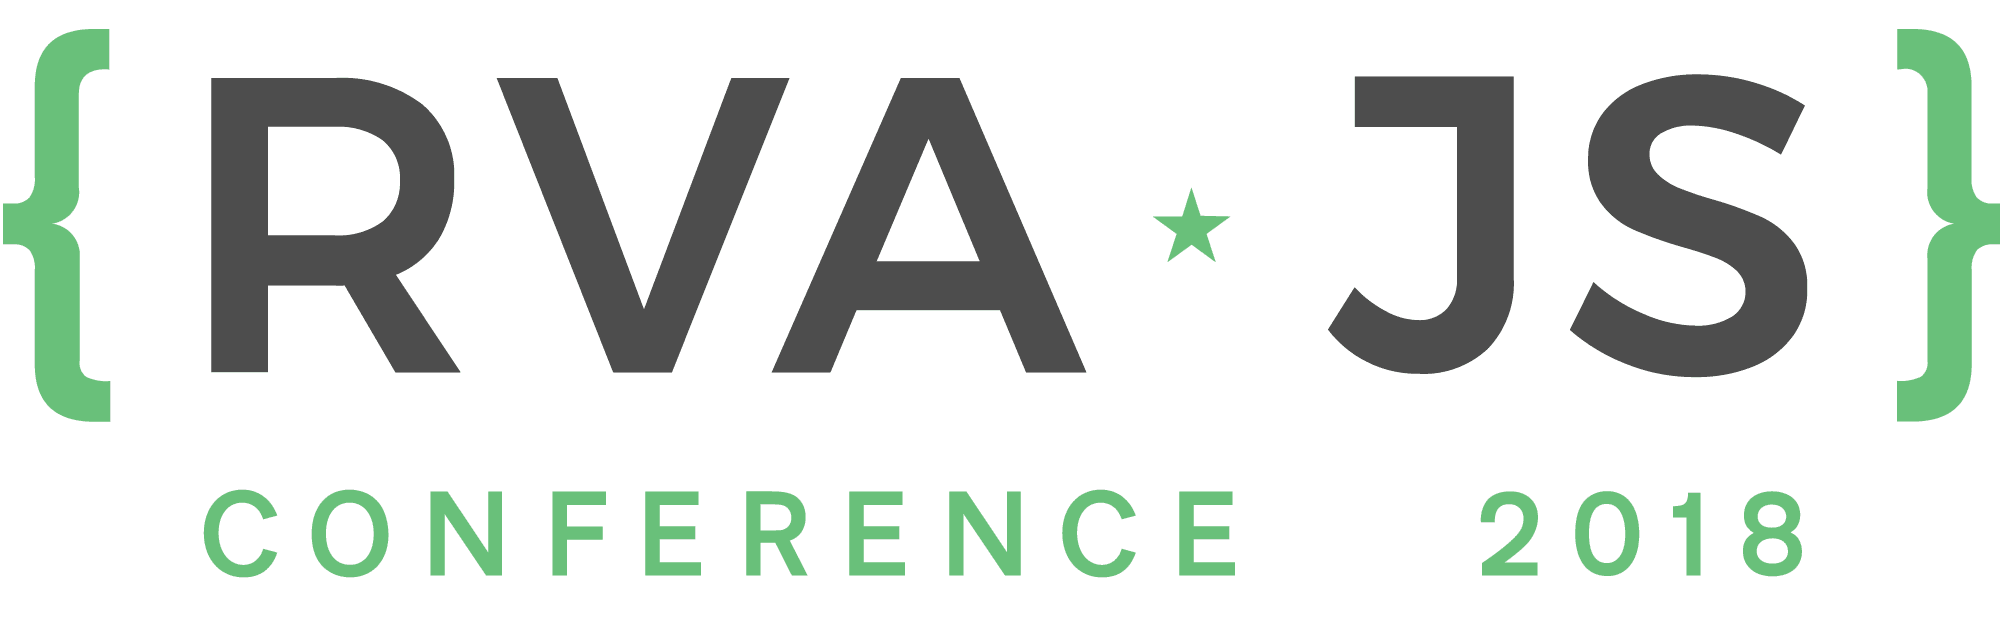 RVA JavaScript Conference donates $11,000 to CodeVA and Women Who Code